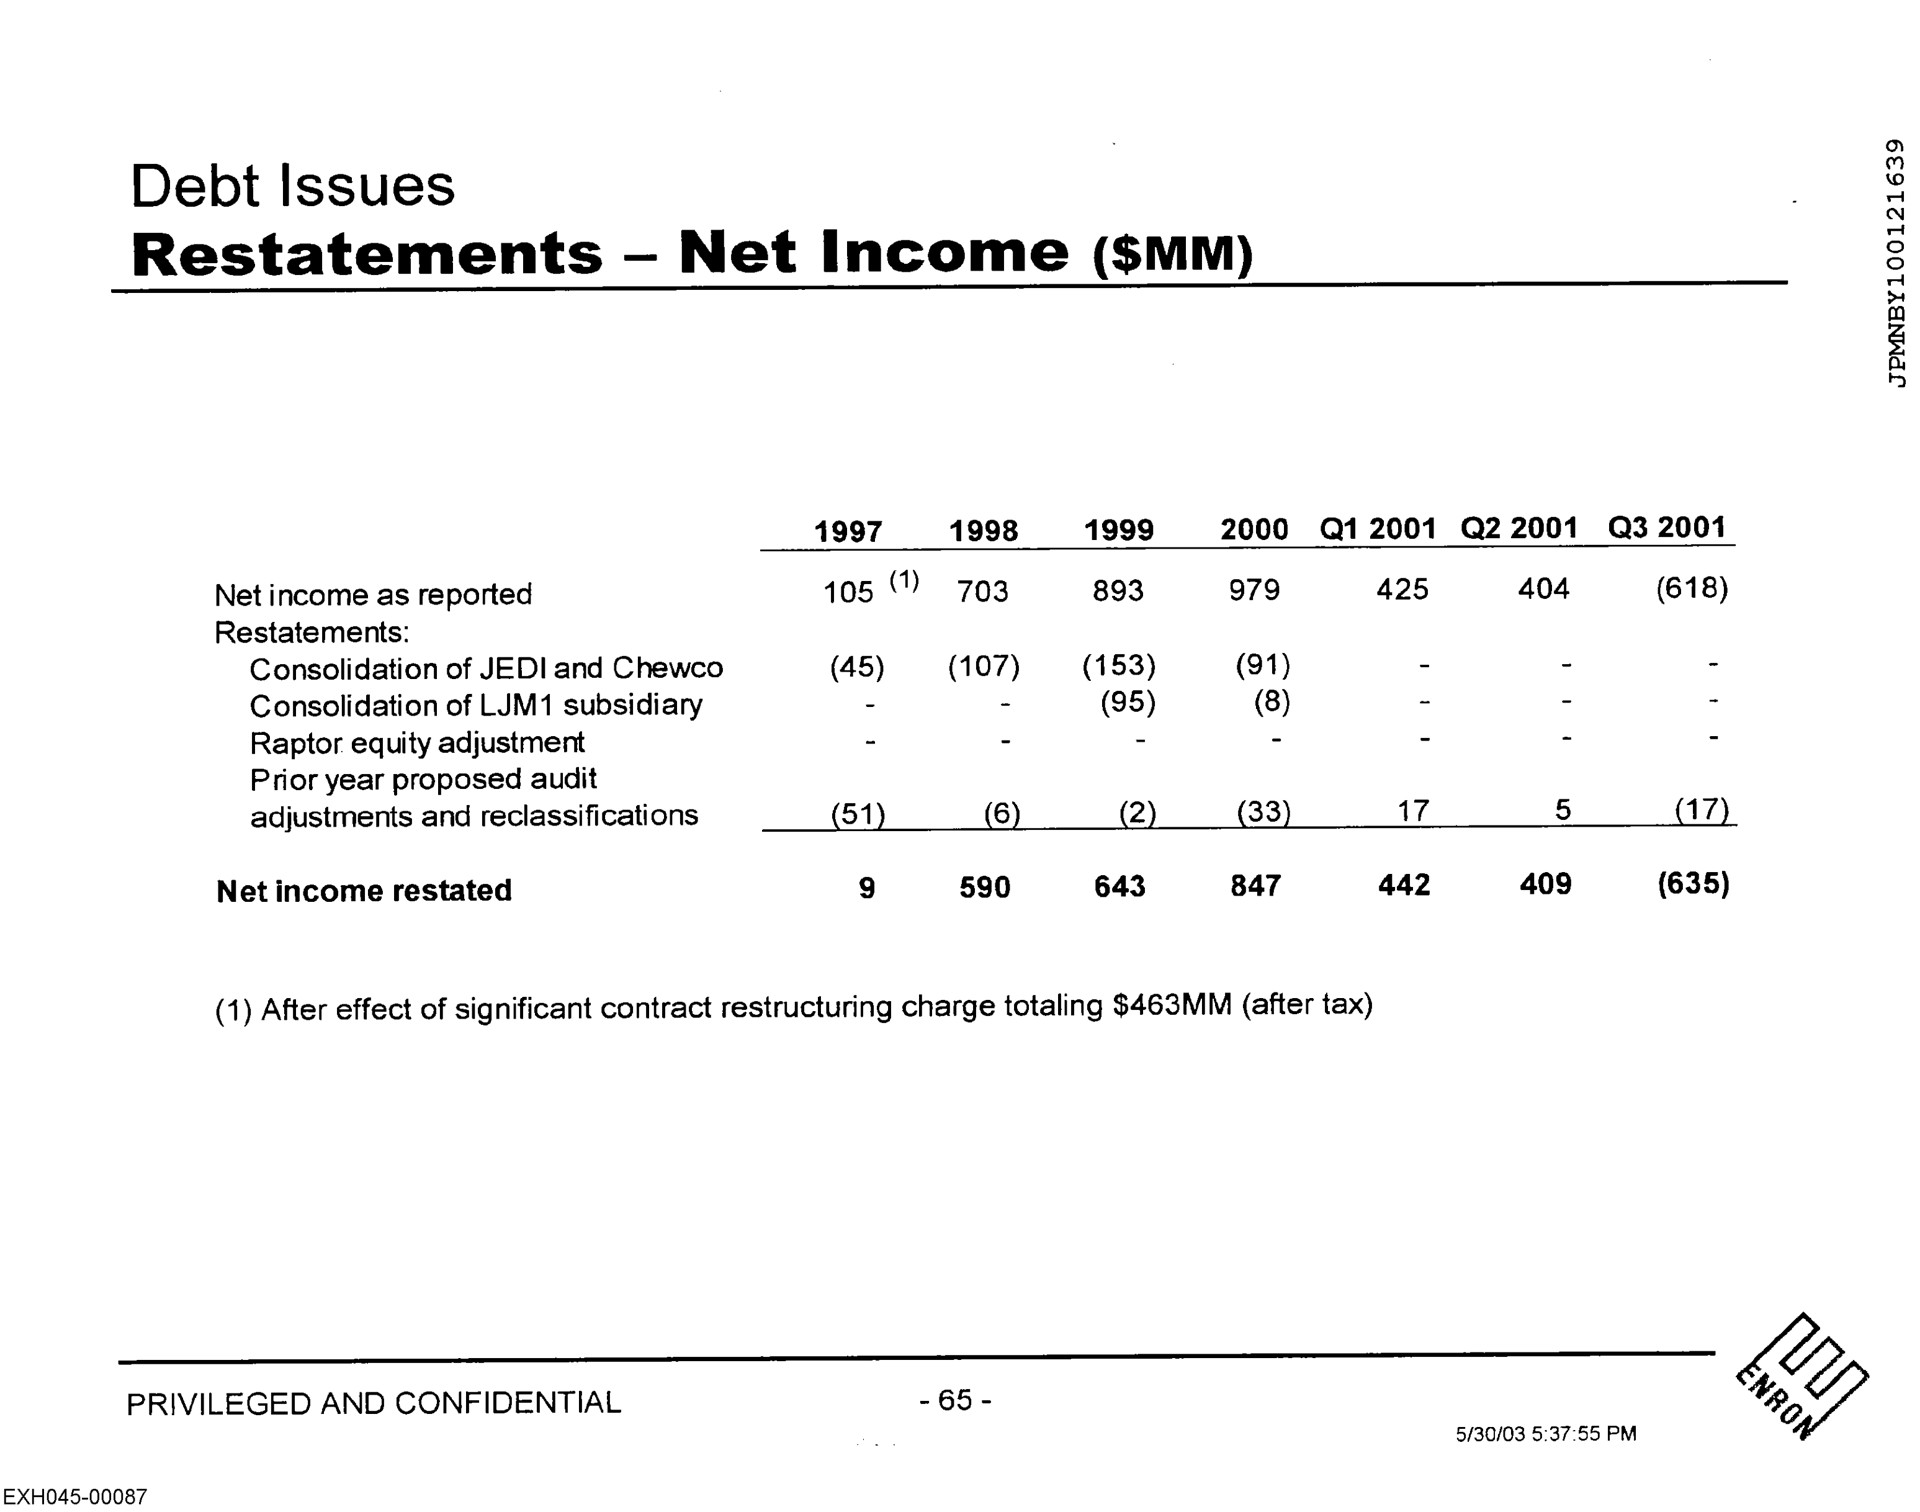 debt issues restatements net income | Enron